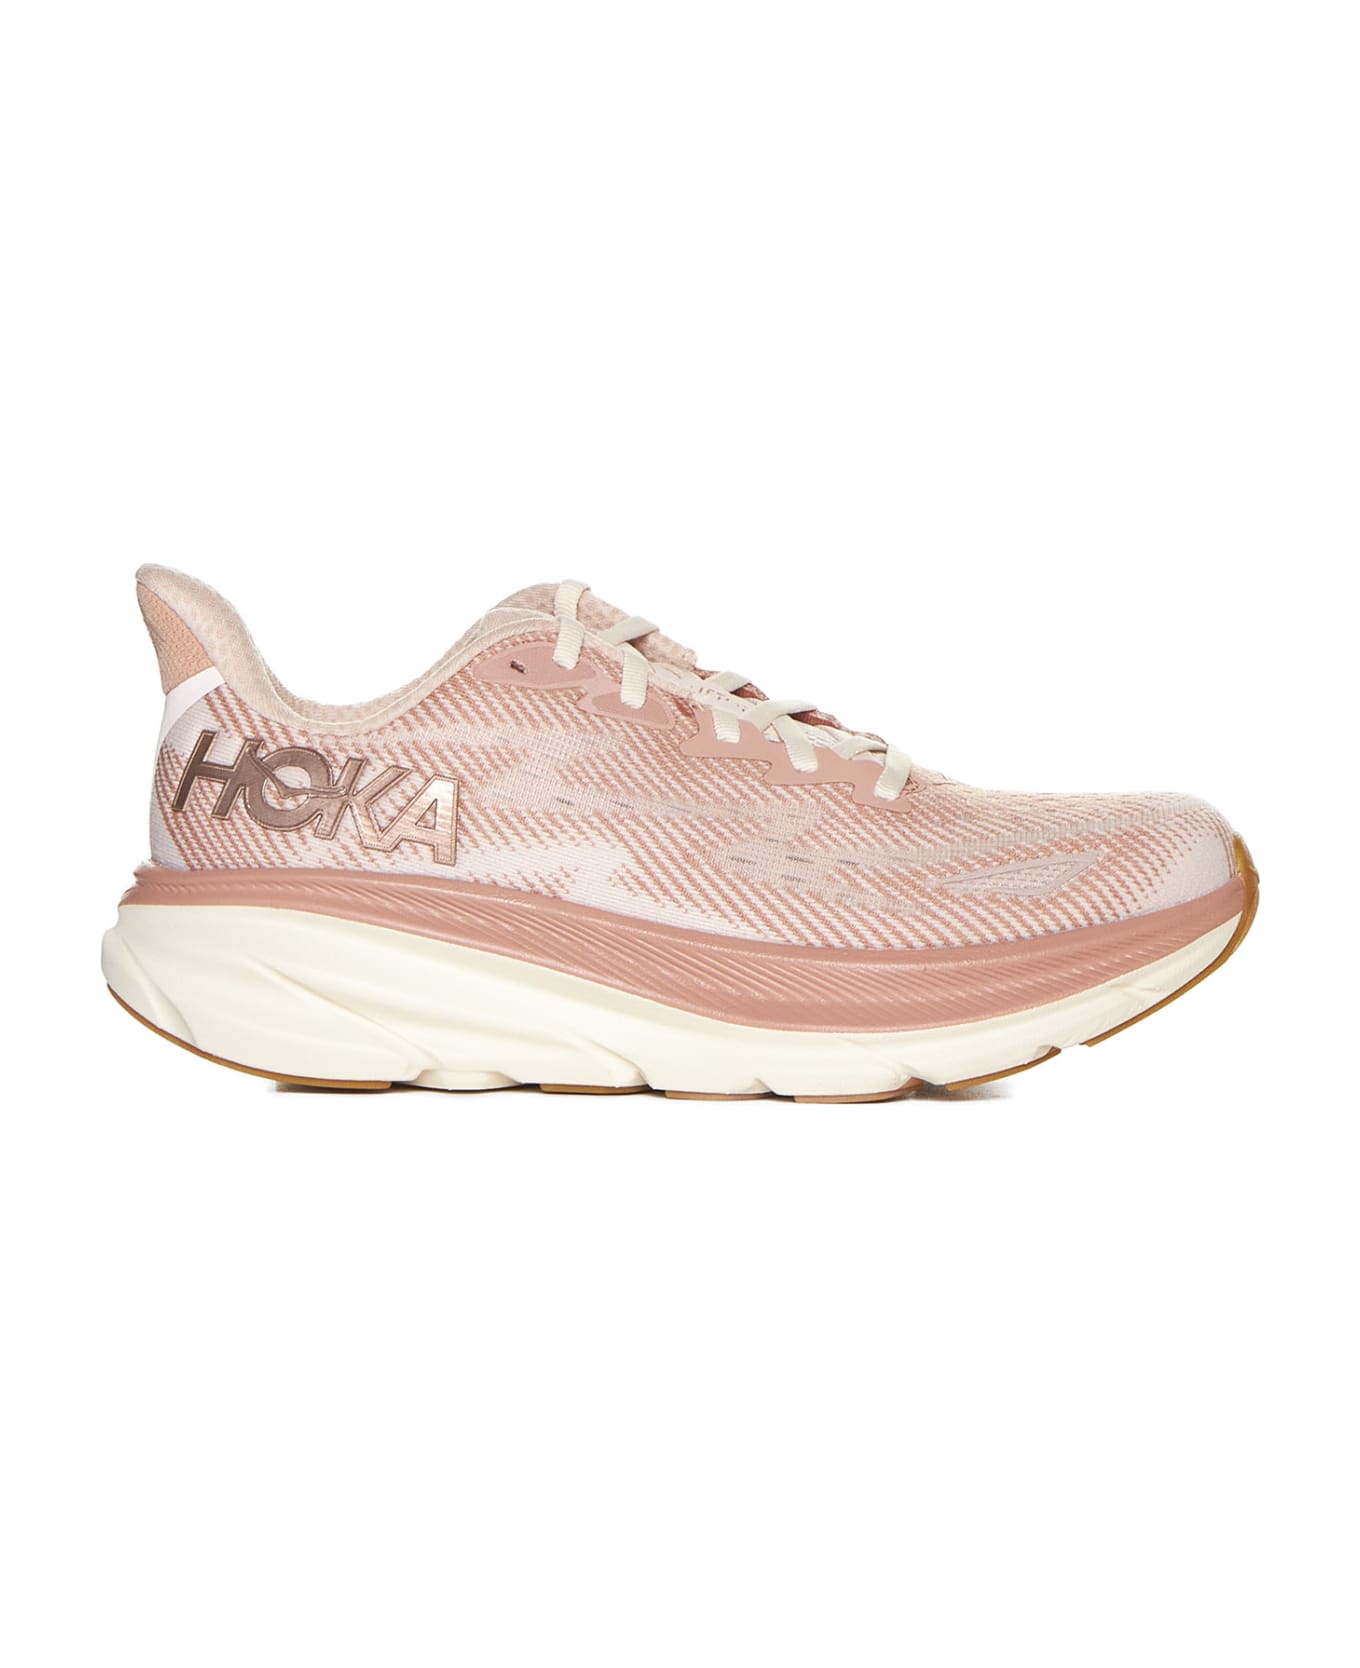 Hoka Sneakers - Sandstone / cream